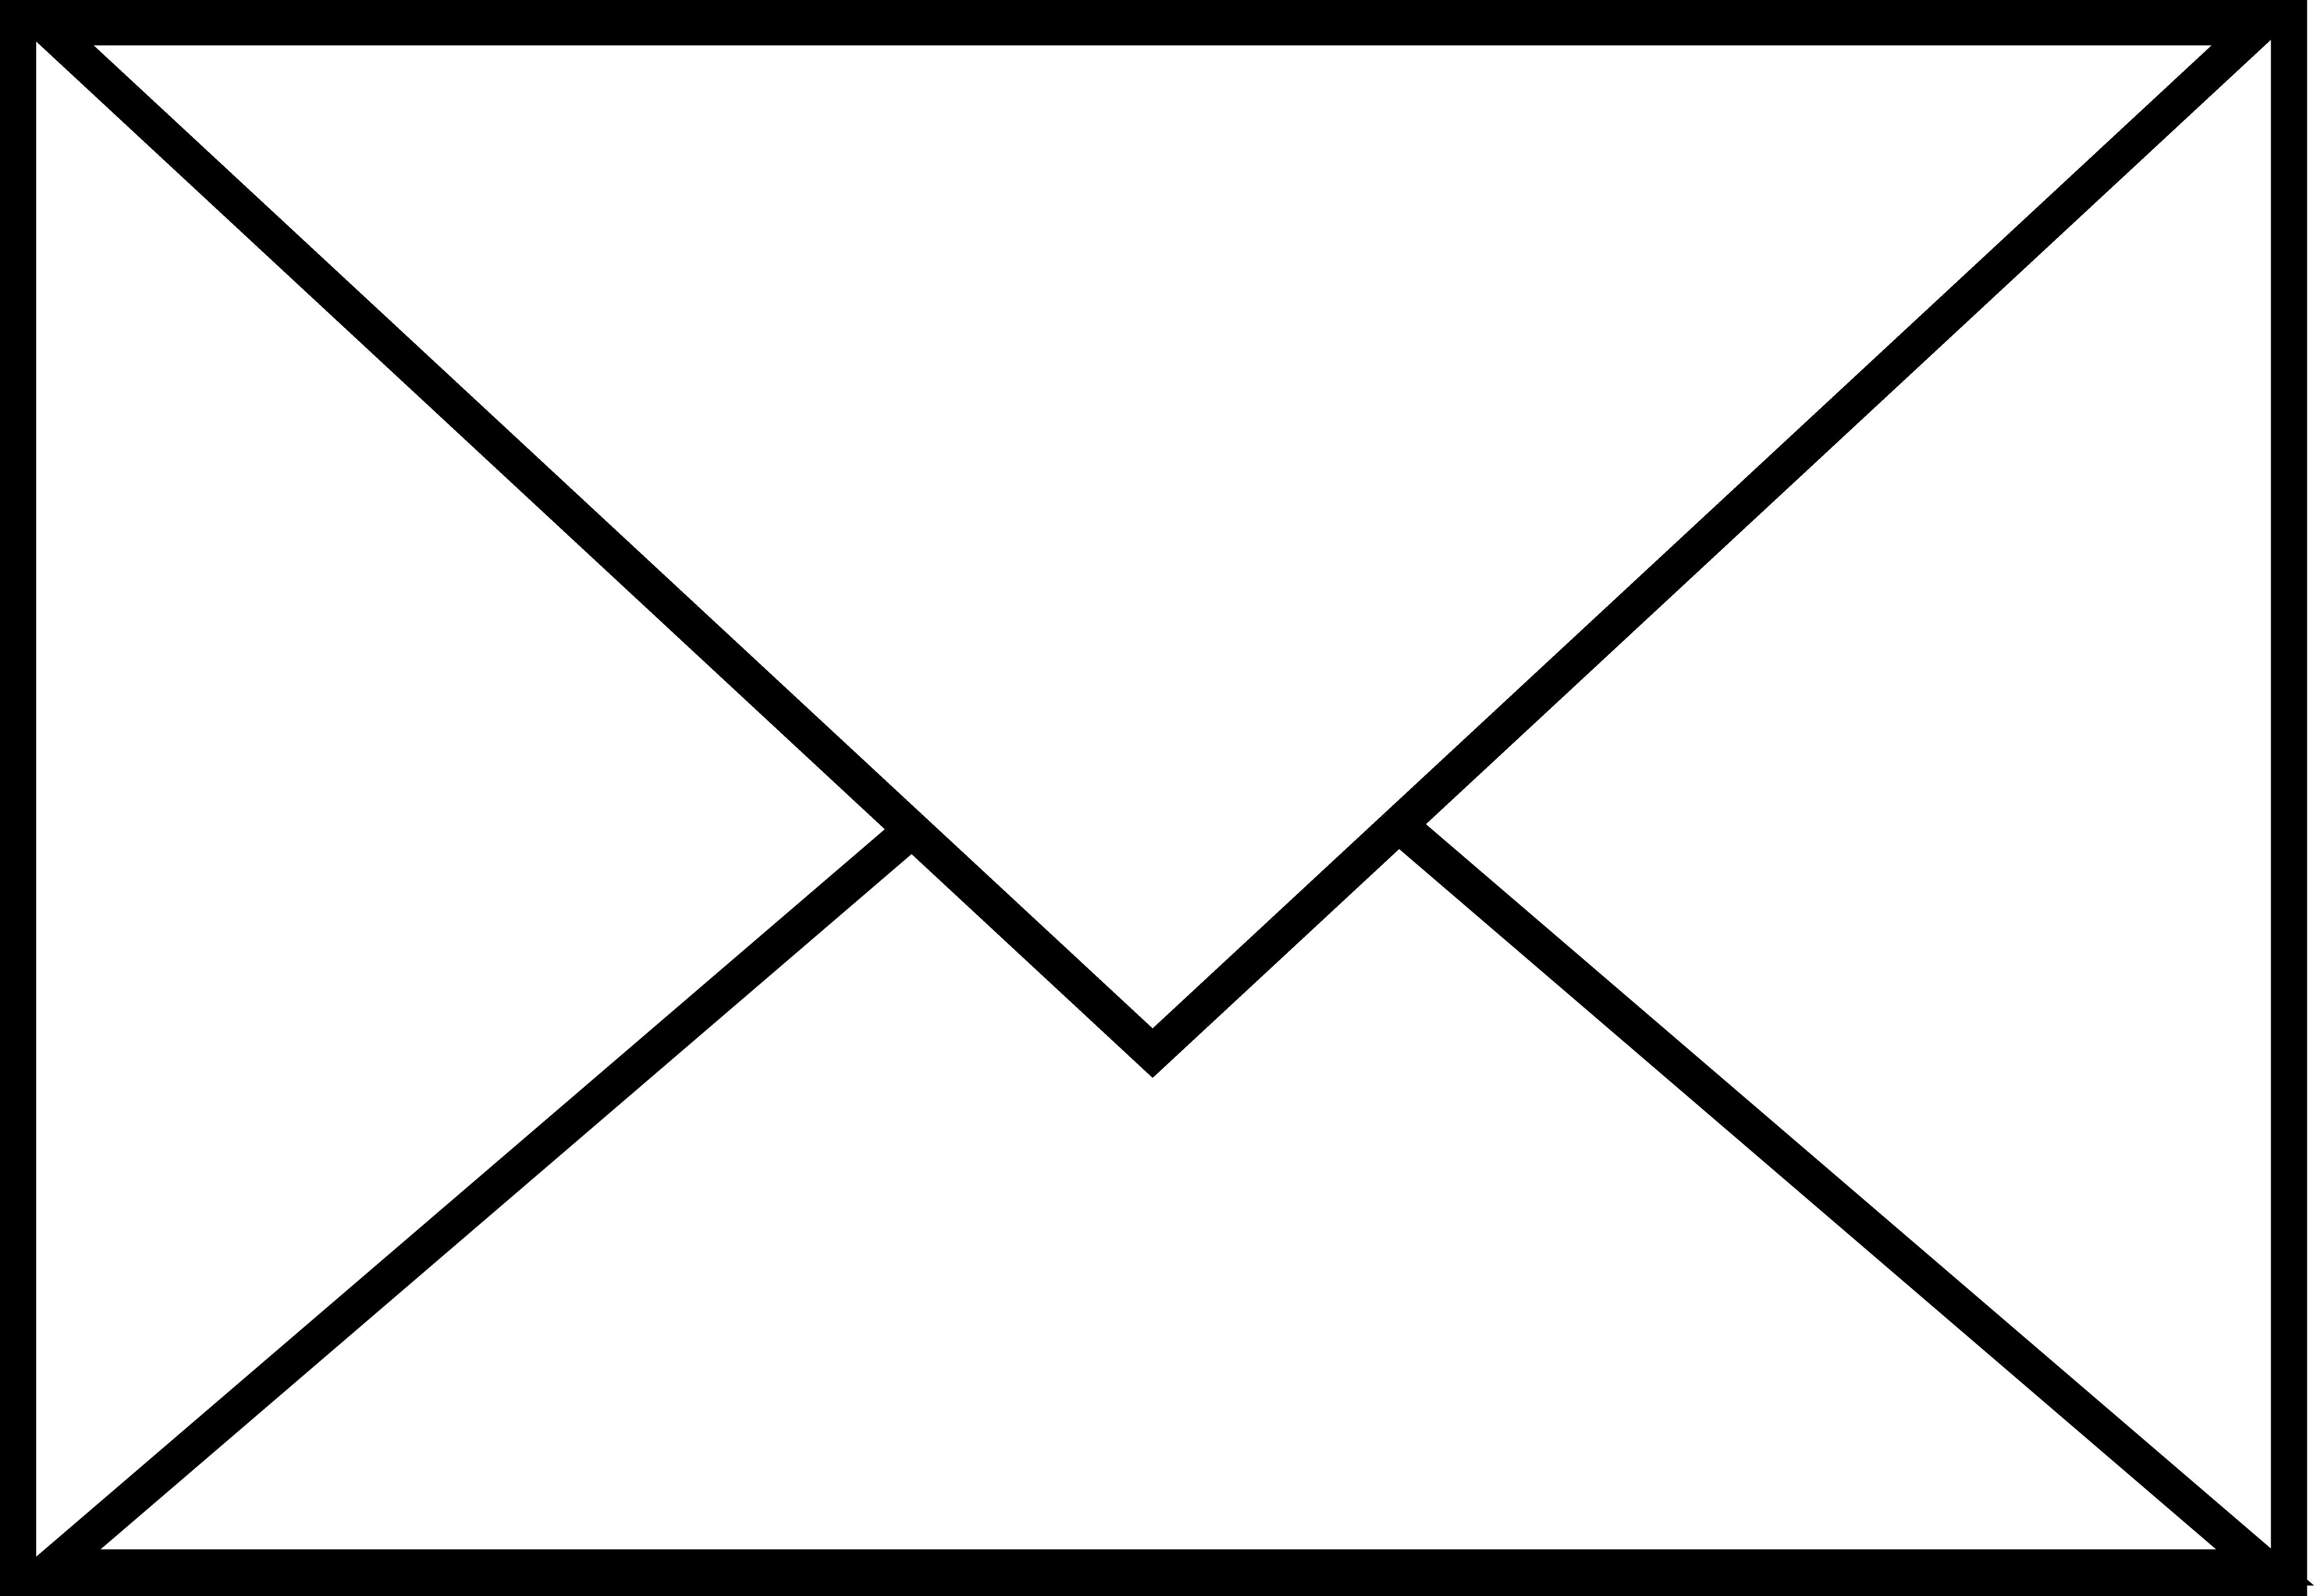 Envelope image clipart